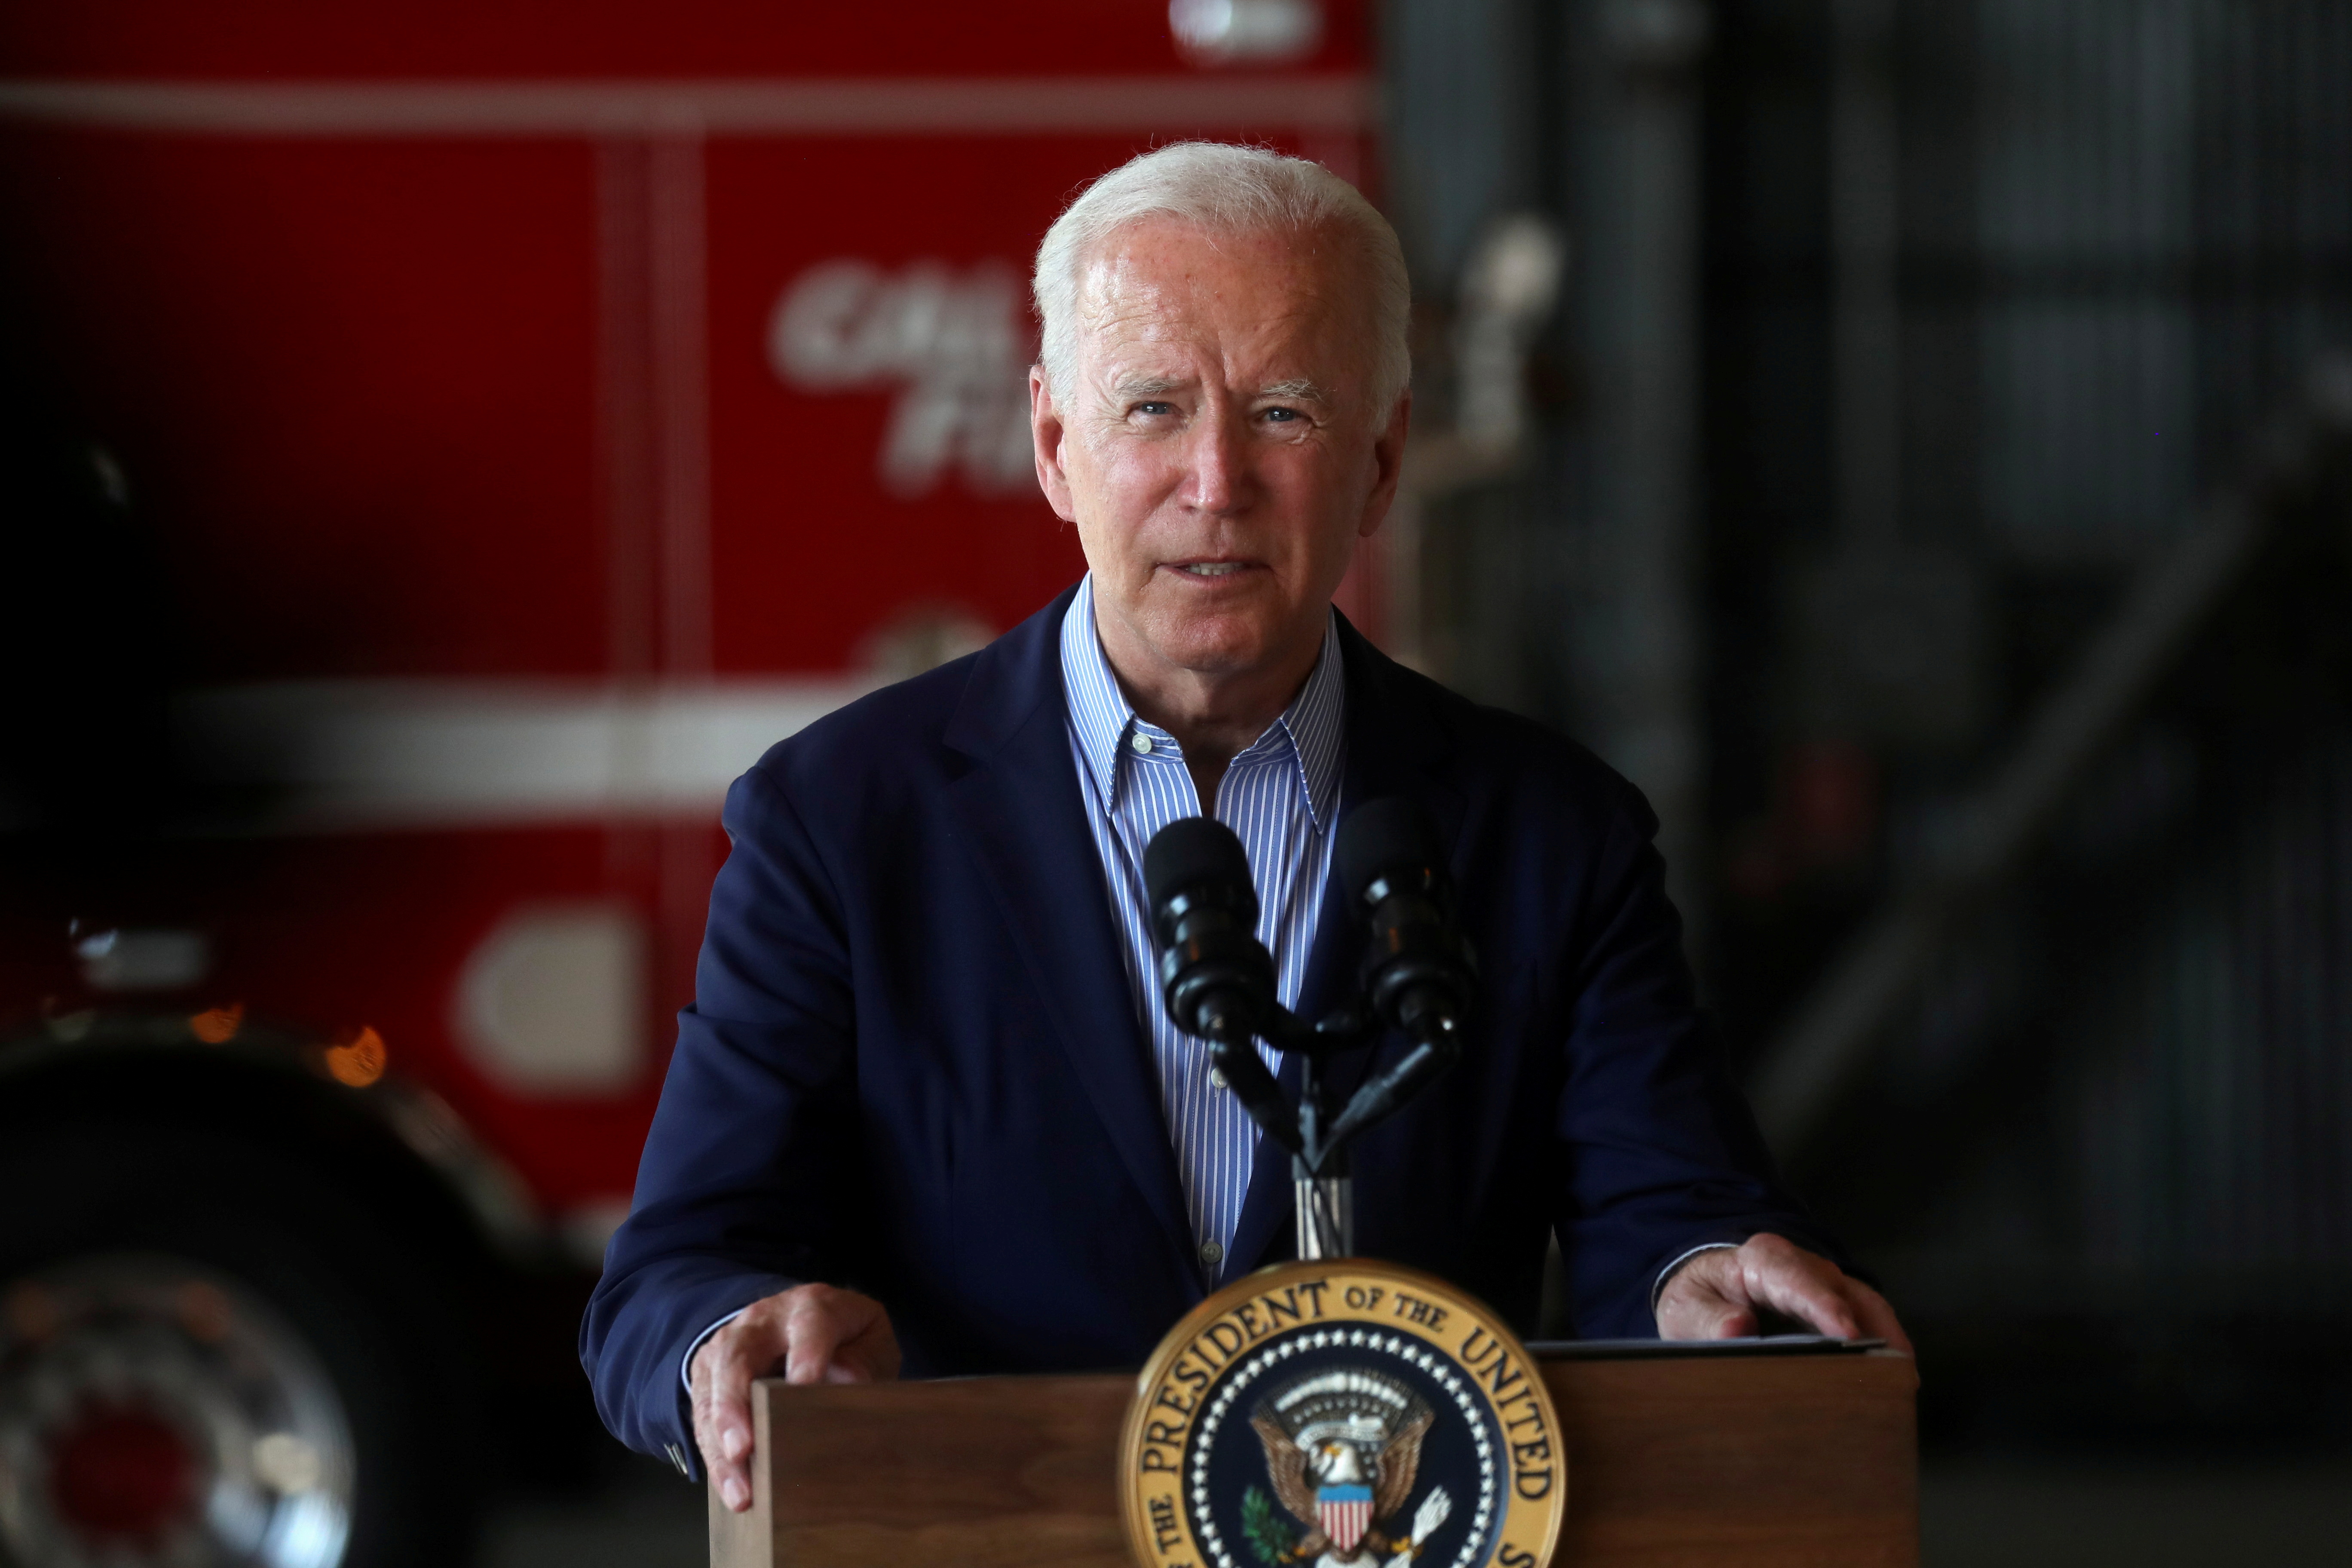 U.S. President Joe Biden gives remarks at Mather Airport, California